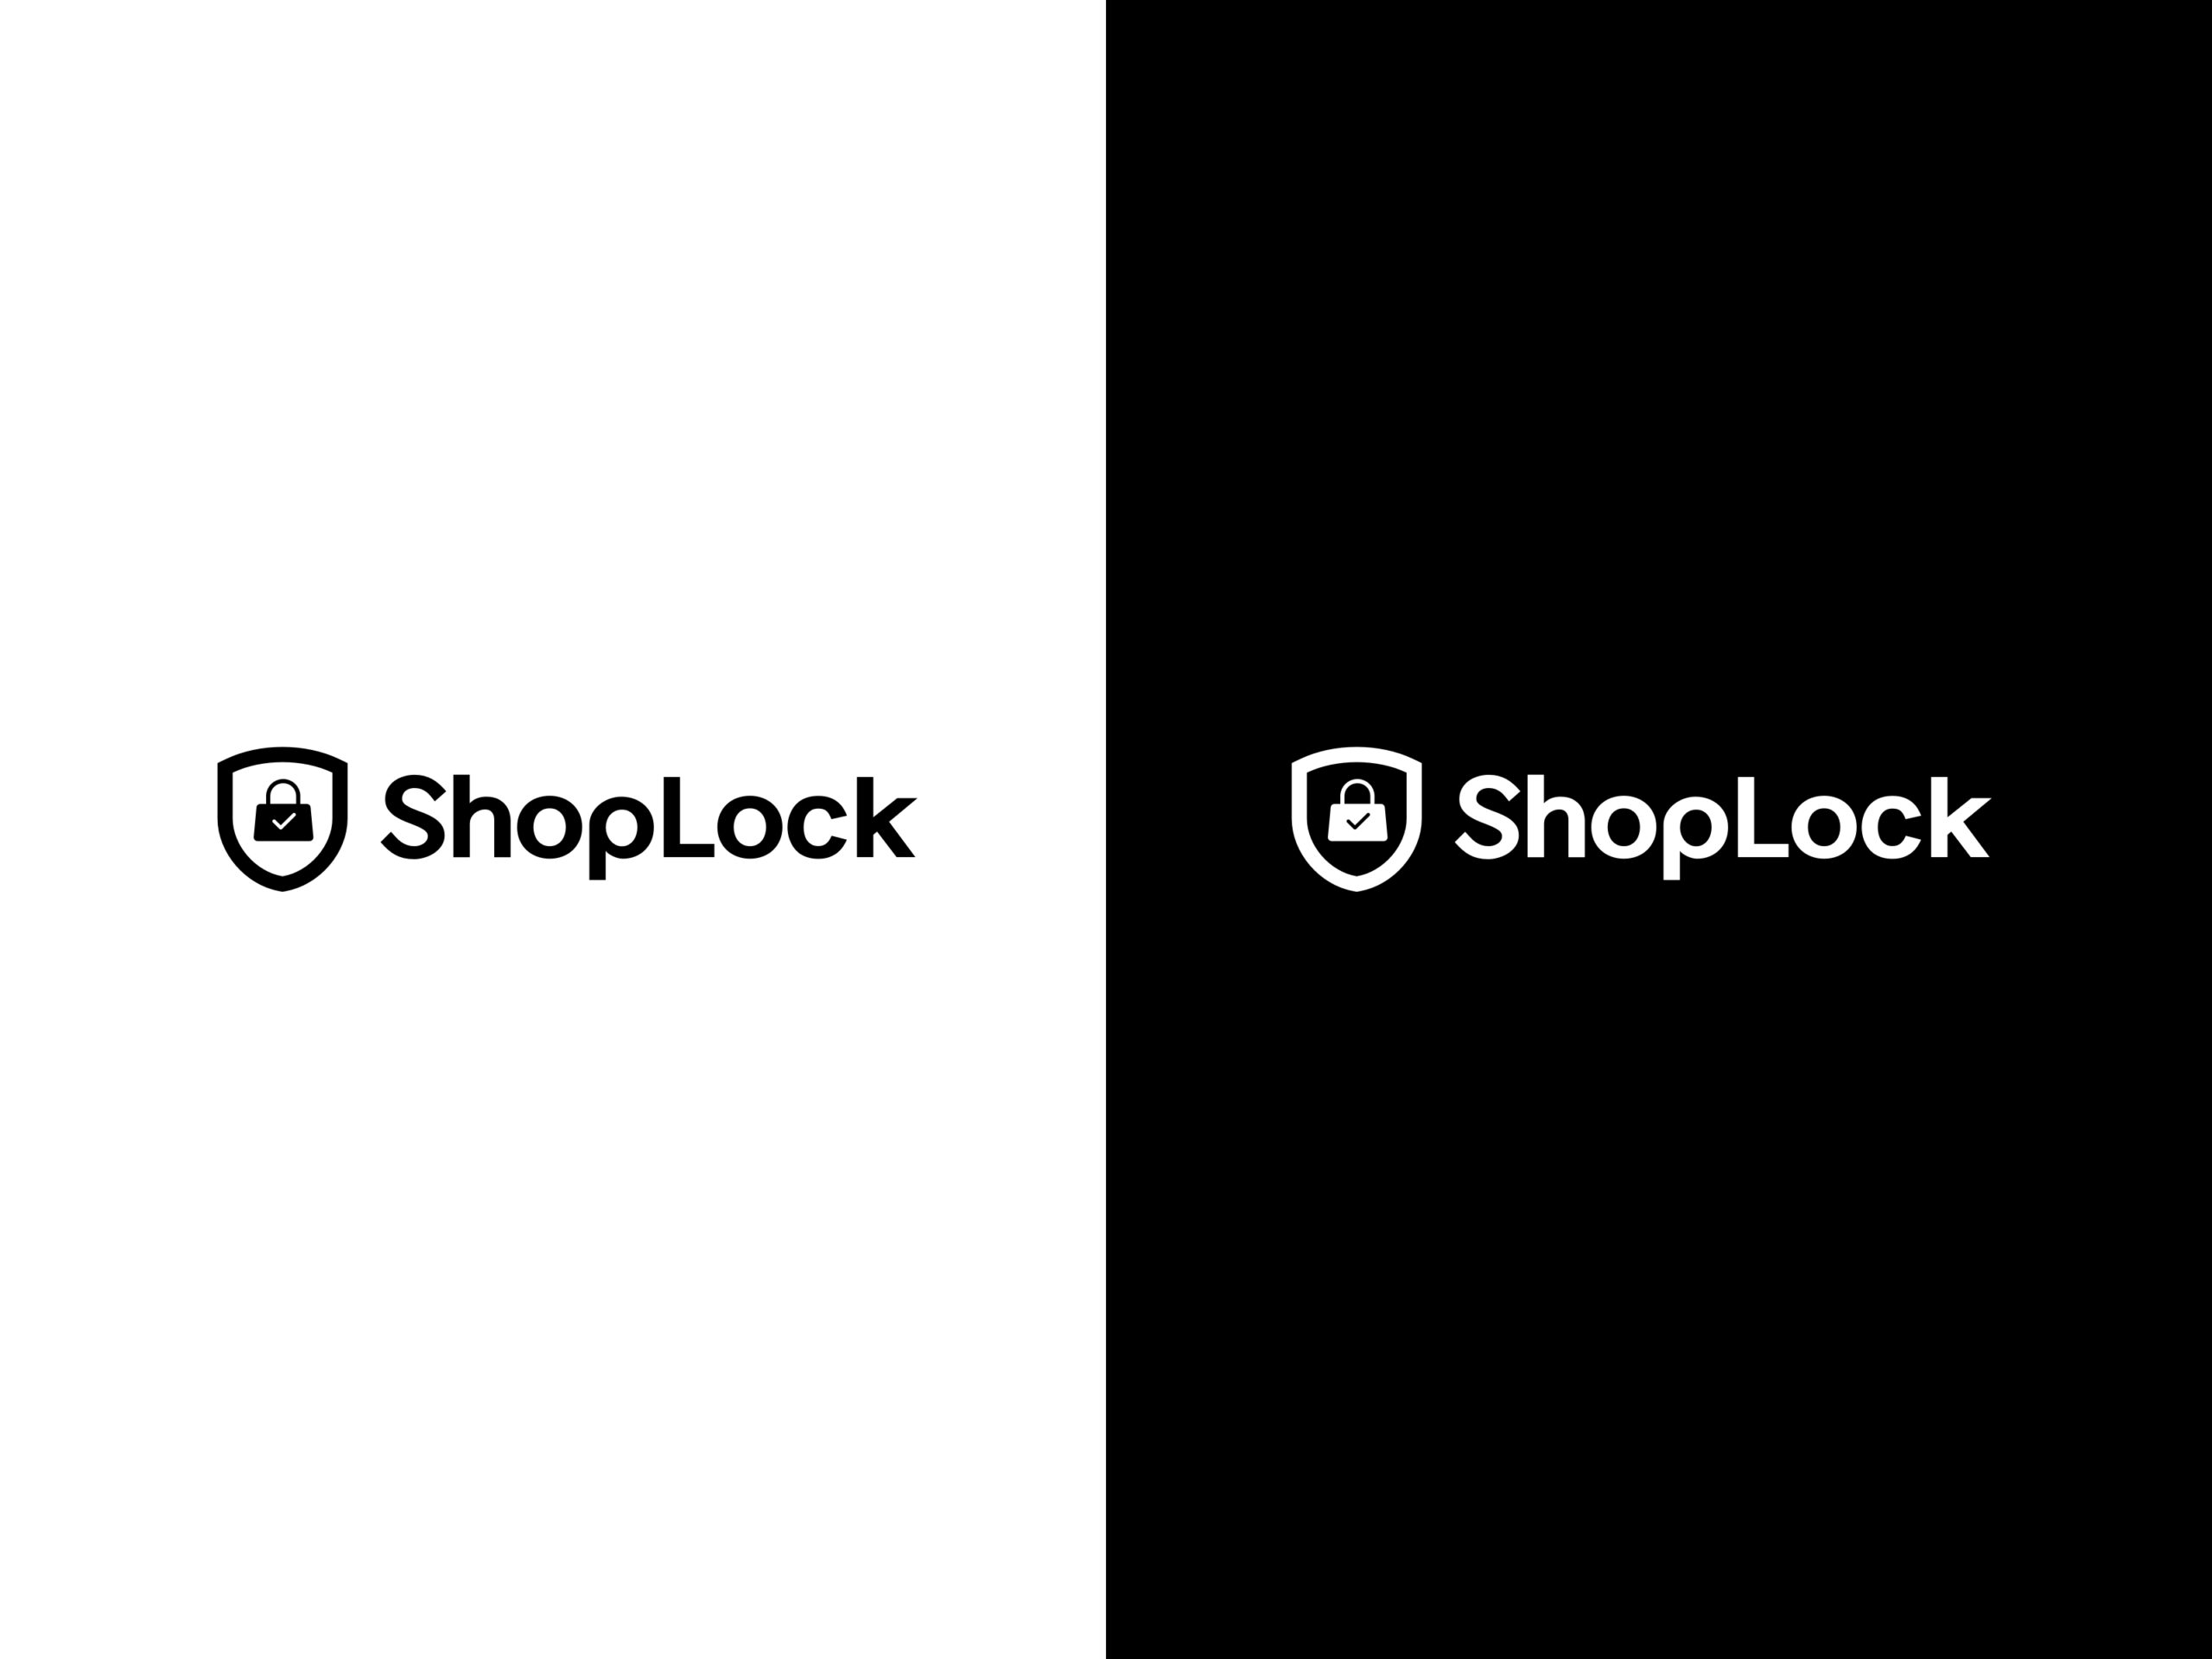 ShopLock Image 